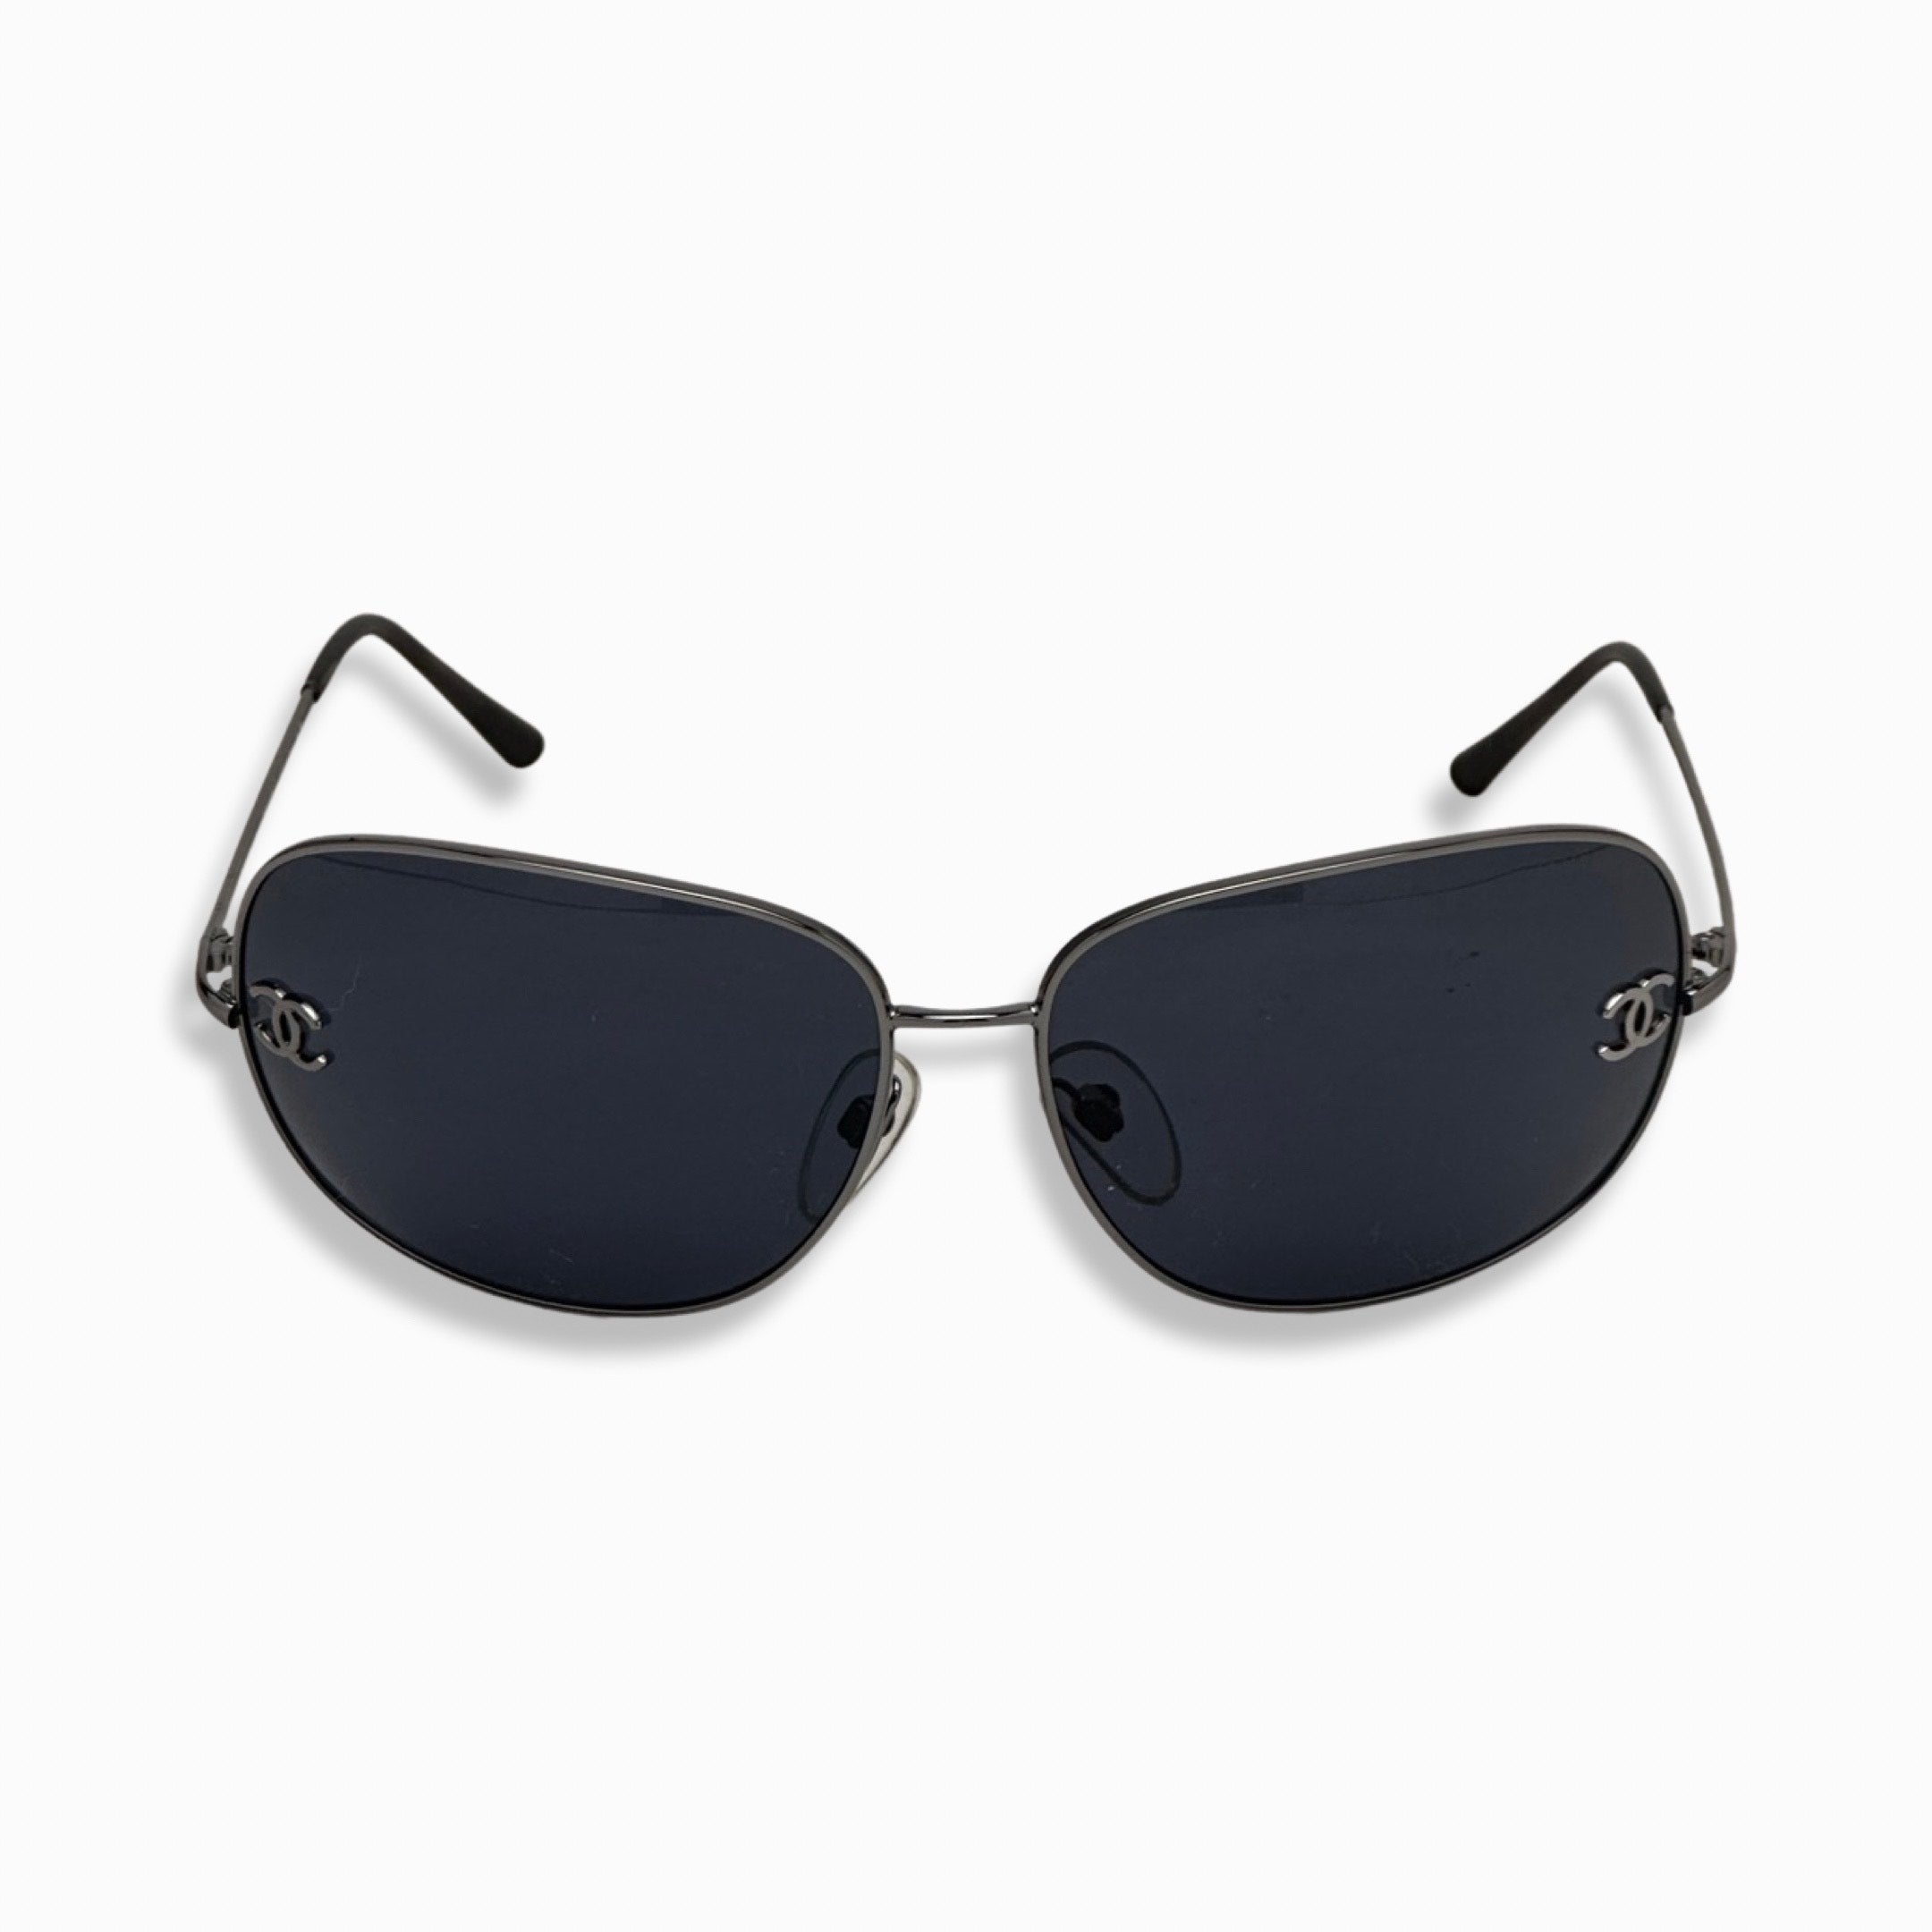 Chanel Men's Aviator Sunglasses